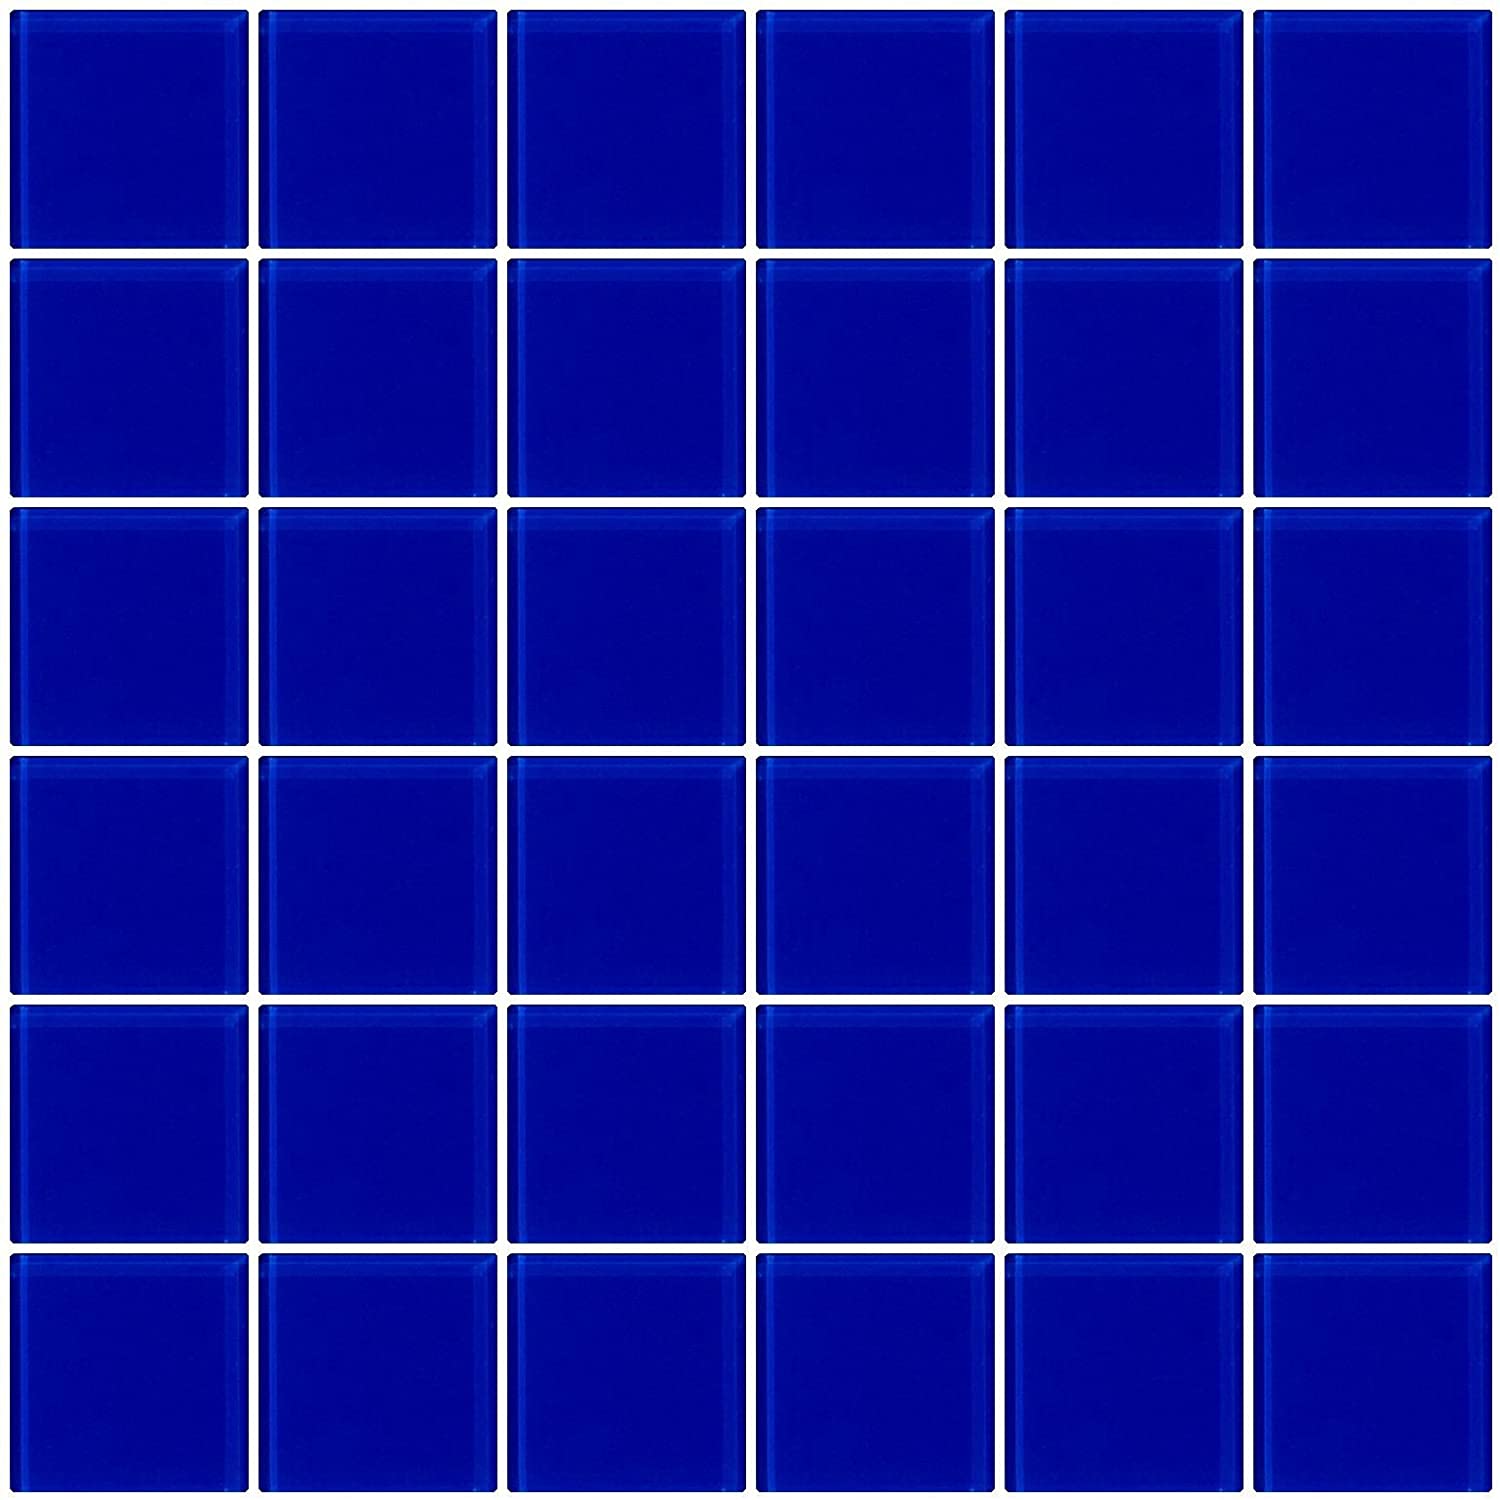 Premium Quality Blue 2x2 Square Mosaic Glass Wall Tile on Mesh 12x12 inch for Kitchen Backsplash, Bathroom Walls, Pool Tiles